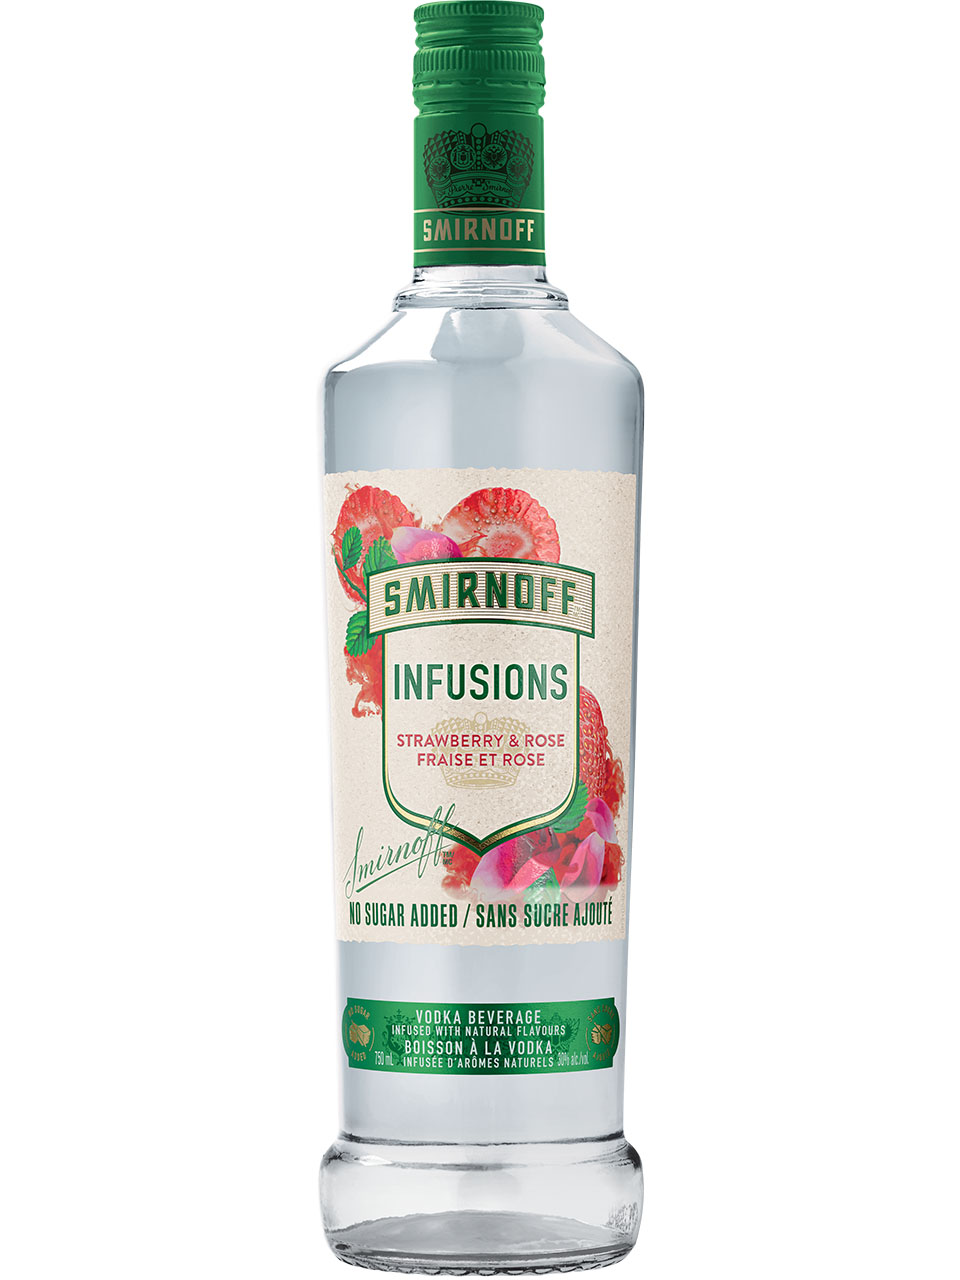 Smirnoff Infusions Strawberry & Rose Vodka